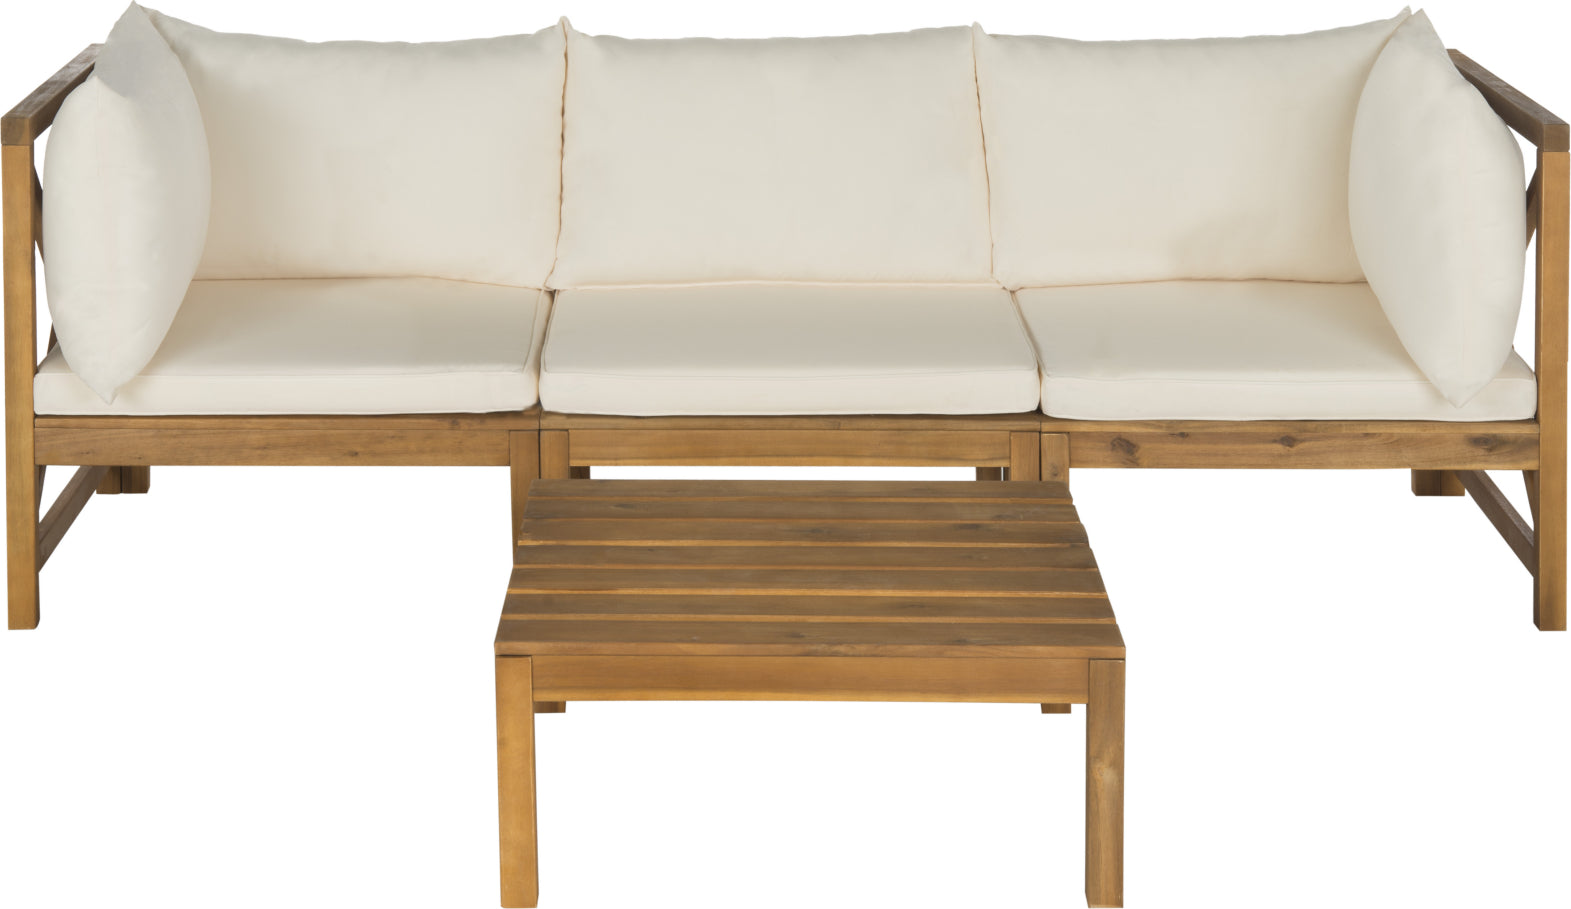 Safavieh Lynwood Modular Outdoor Sectional Teak Brown/Beige Furniture main image